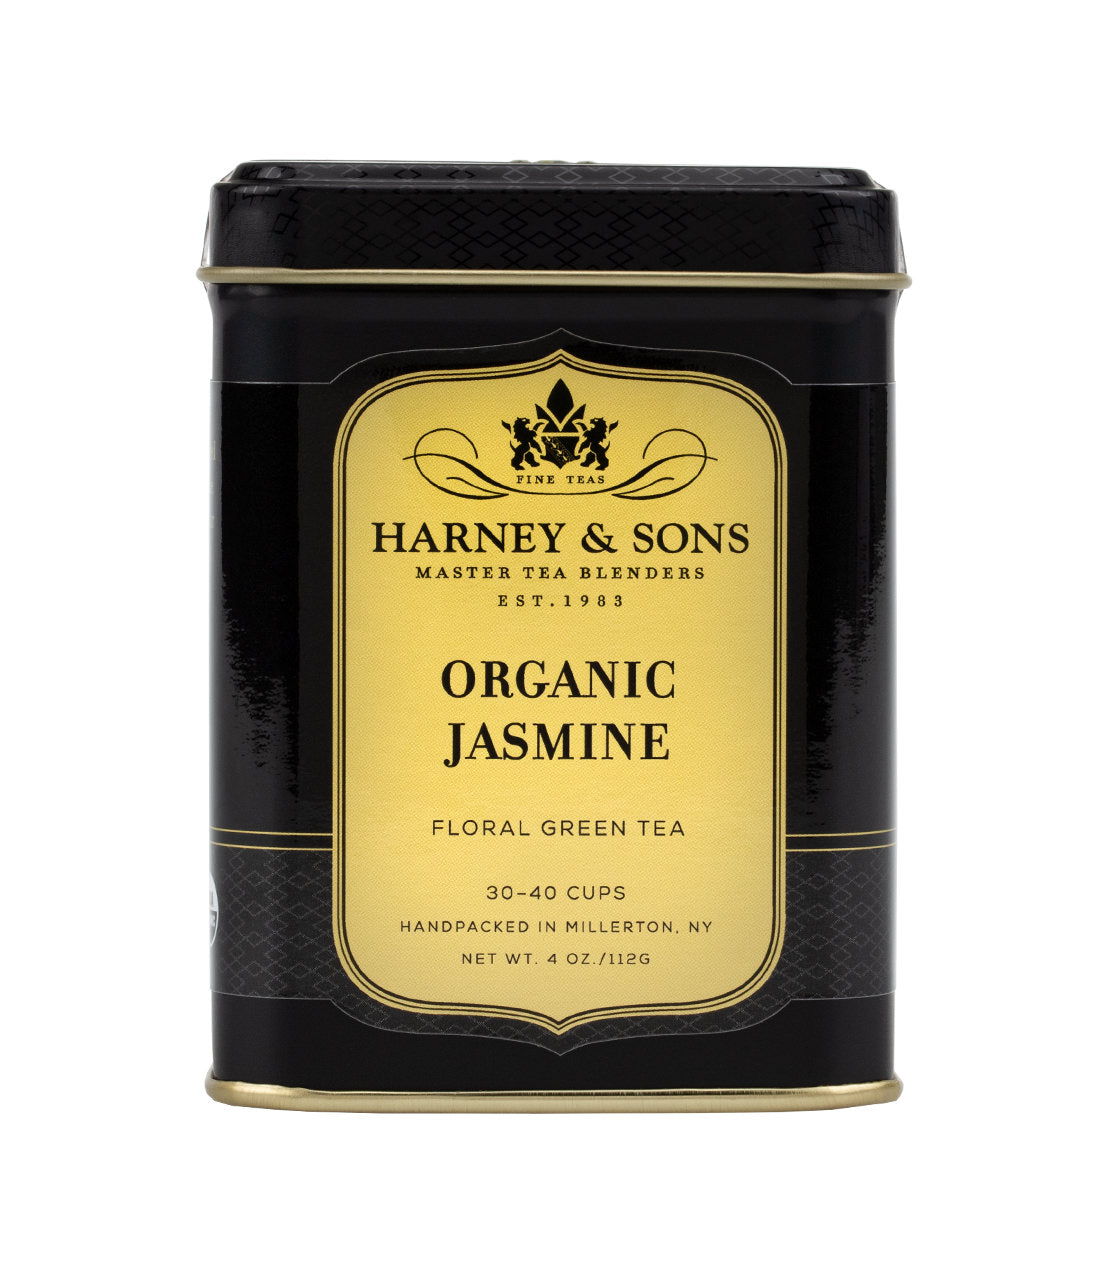 Organic Jasmine - Loose 4 oz. Tin - Harney & Sons Fine Teas